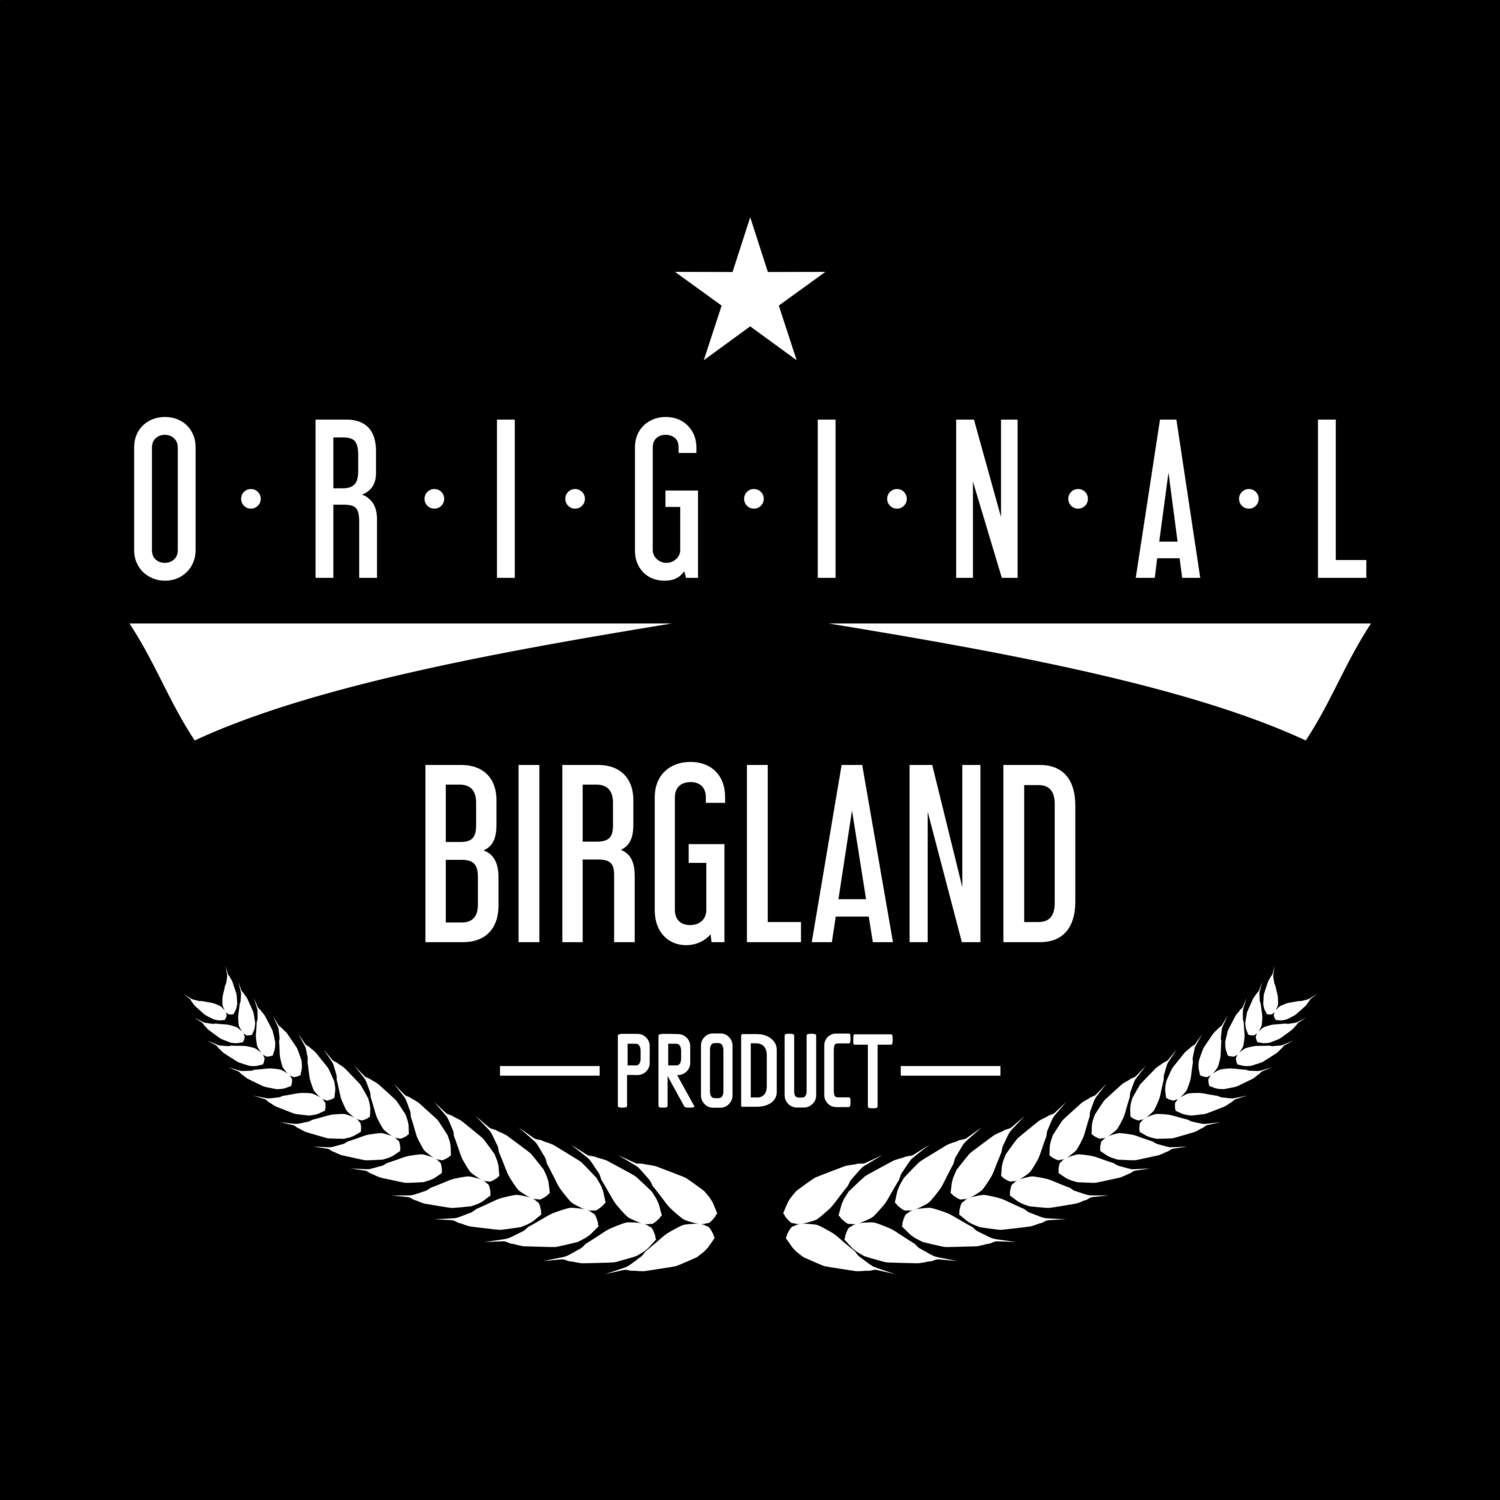 Birgland T-Shirt »Original Product«